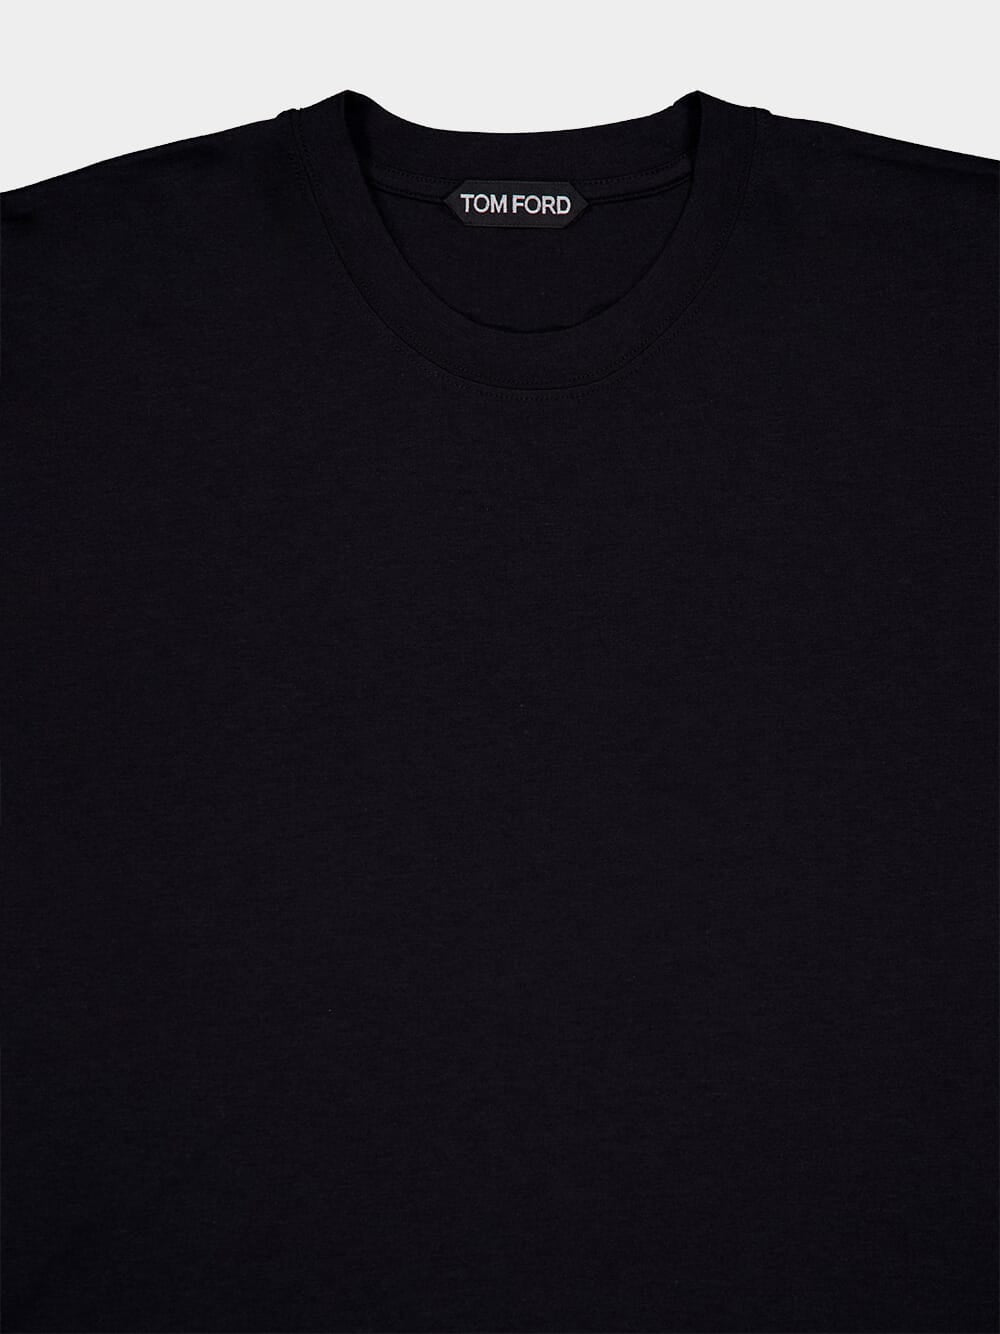 Tom FordCotton t-shirt at Fashion Clinic